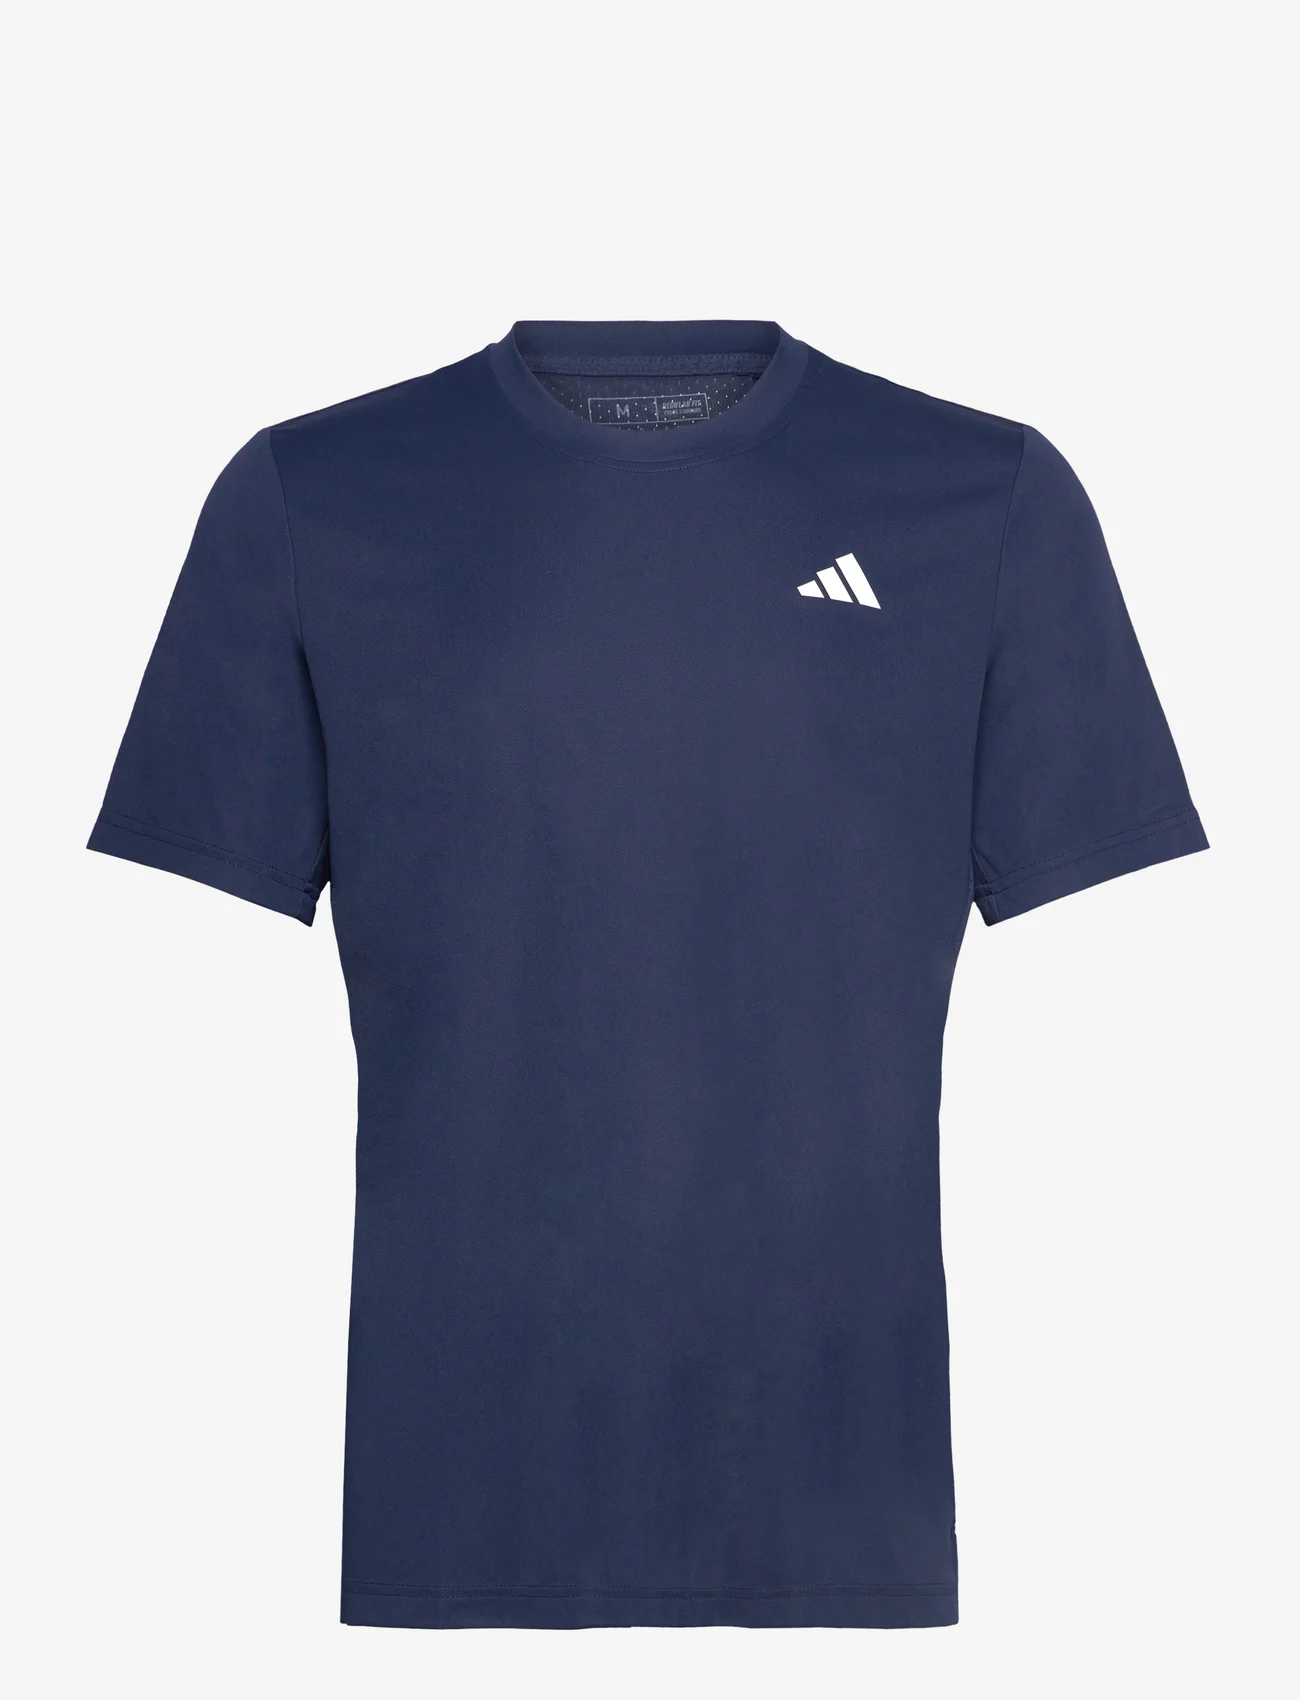 adidas Performance - CLUB TEE - t-shirts - navy - 0